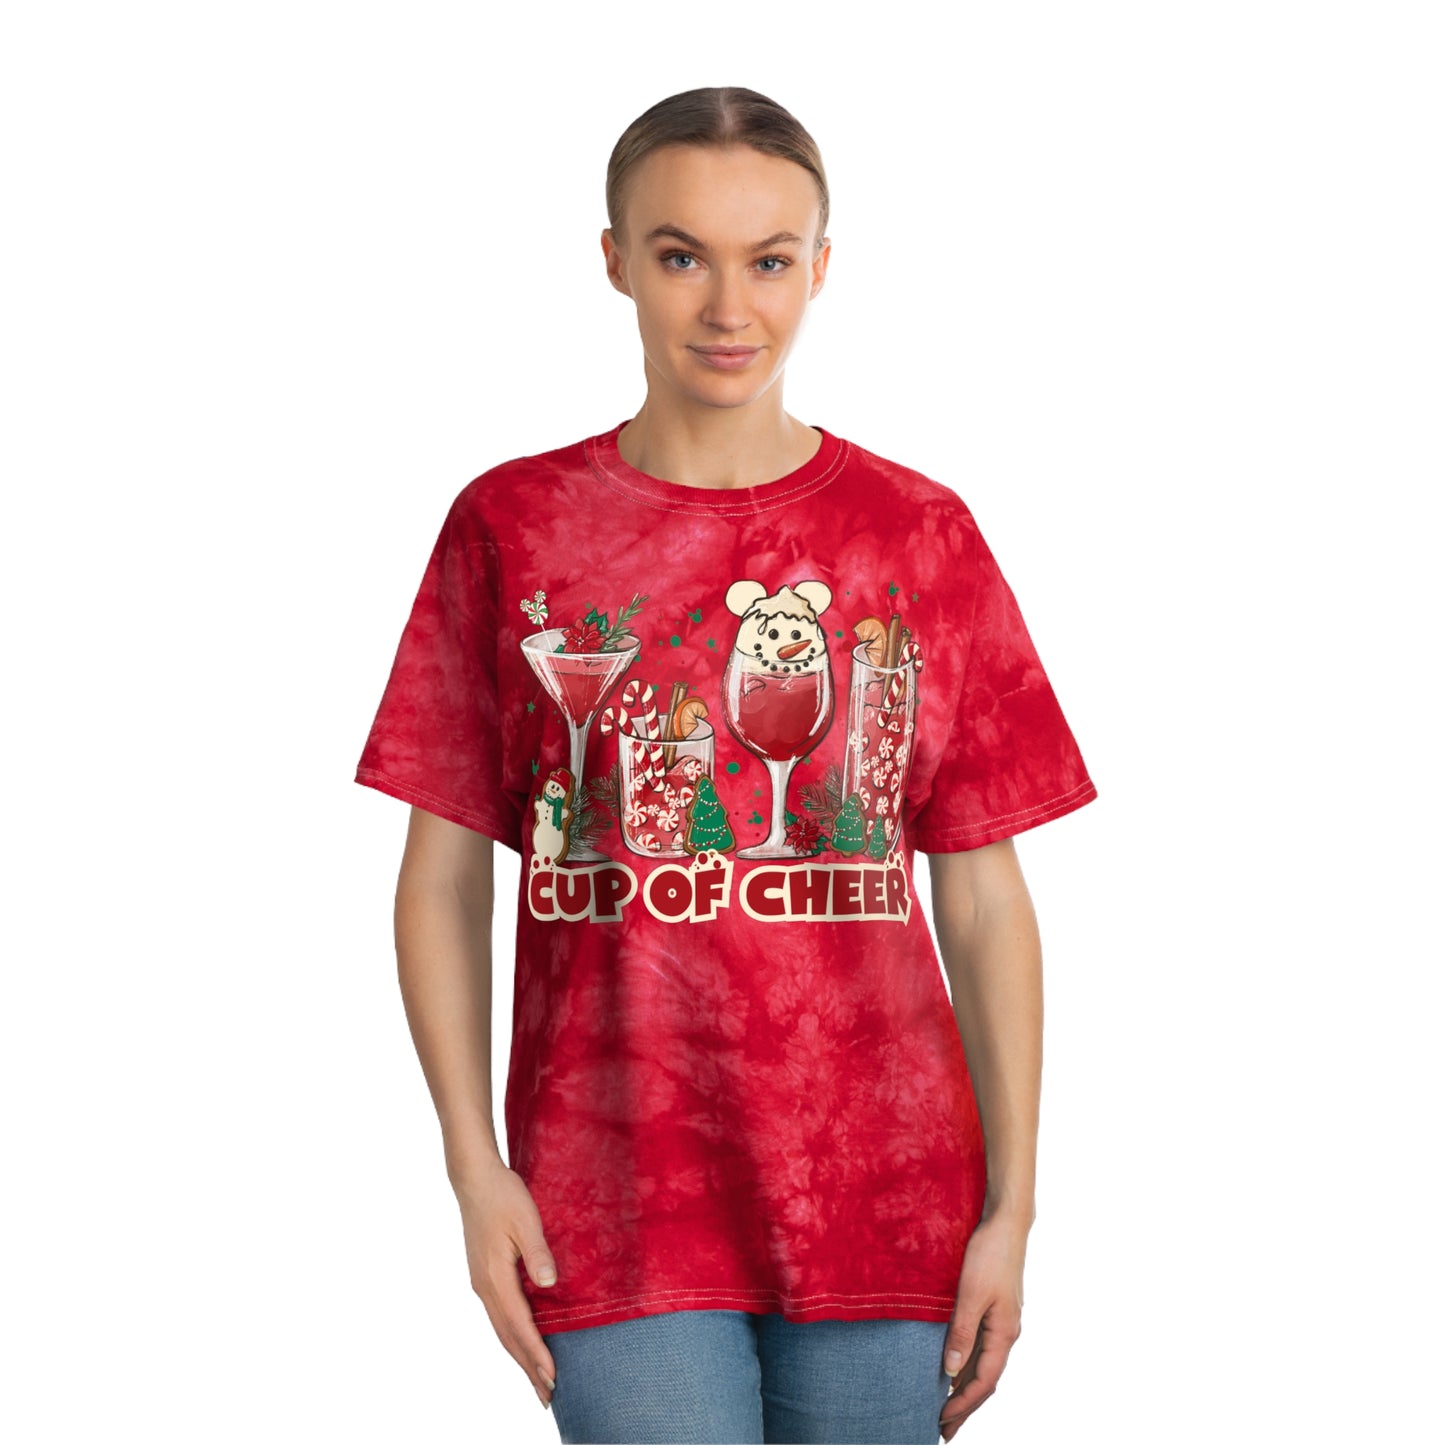 Cup of Cheer - Tie Dye T-Shirt